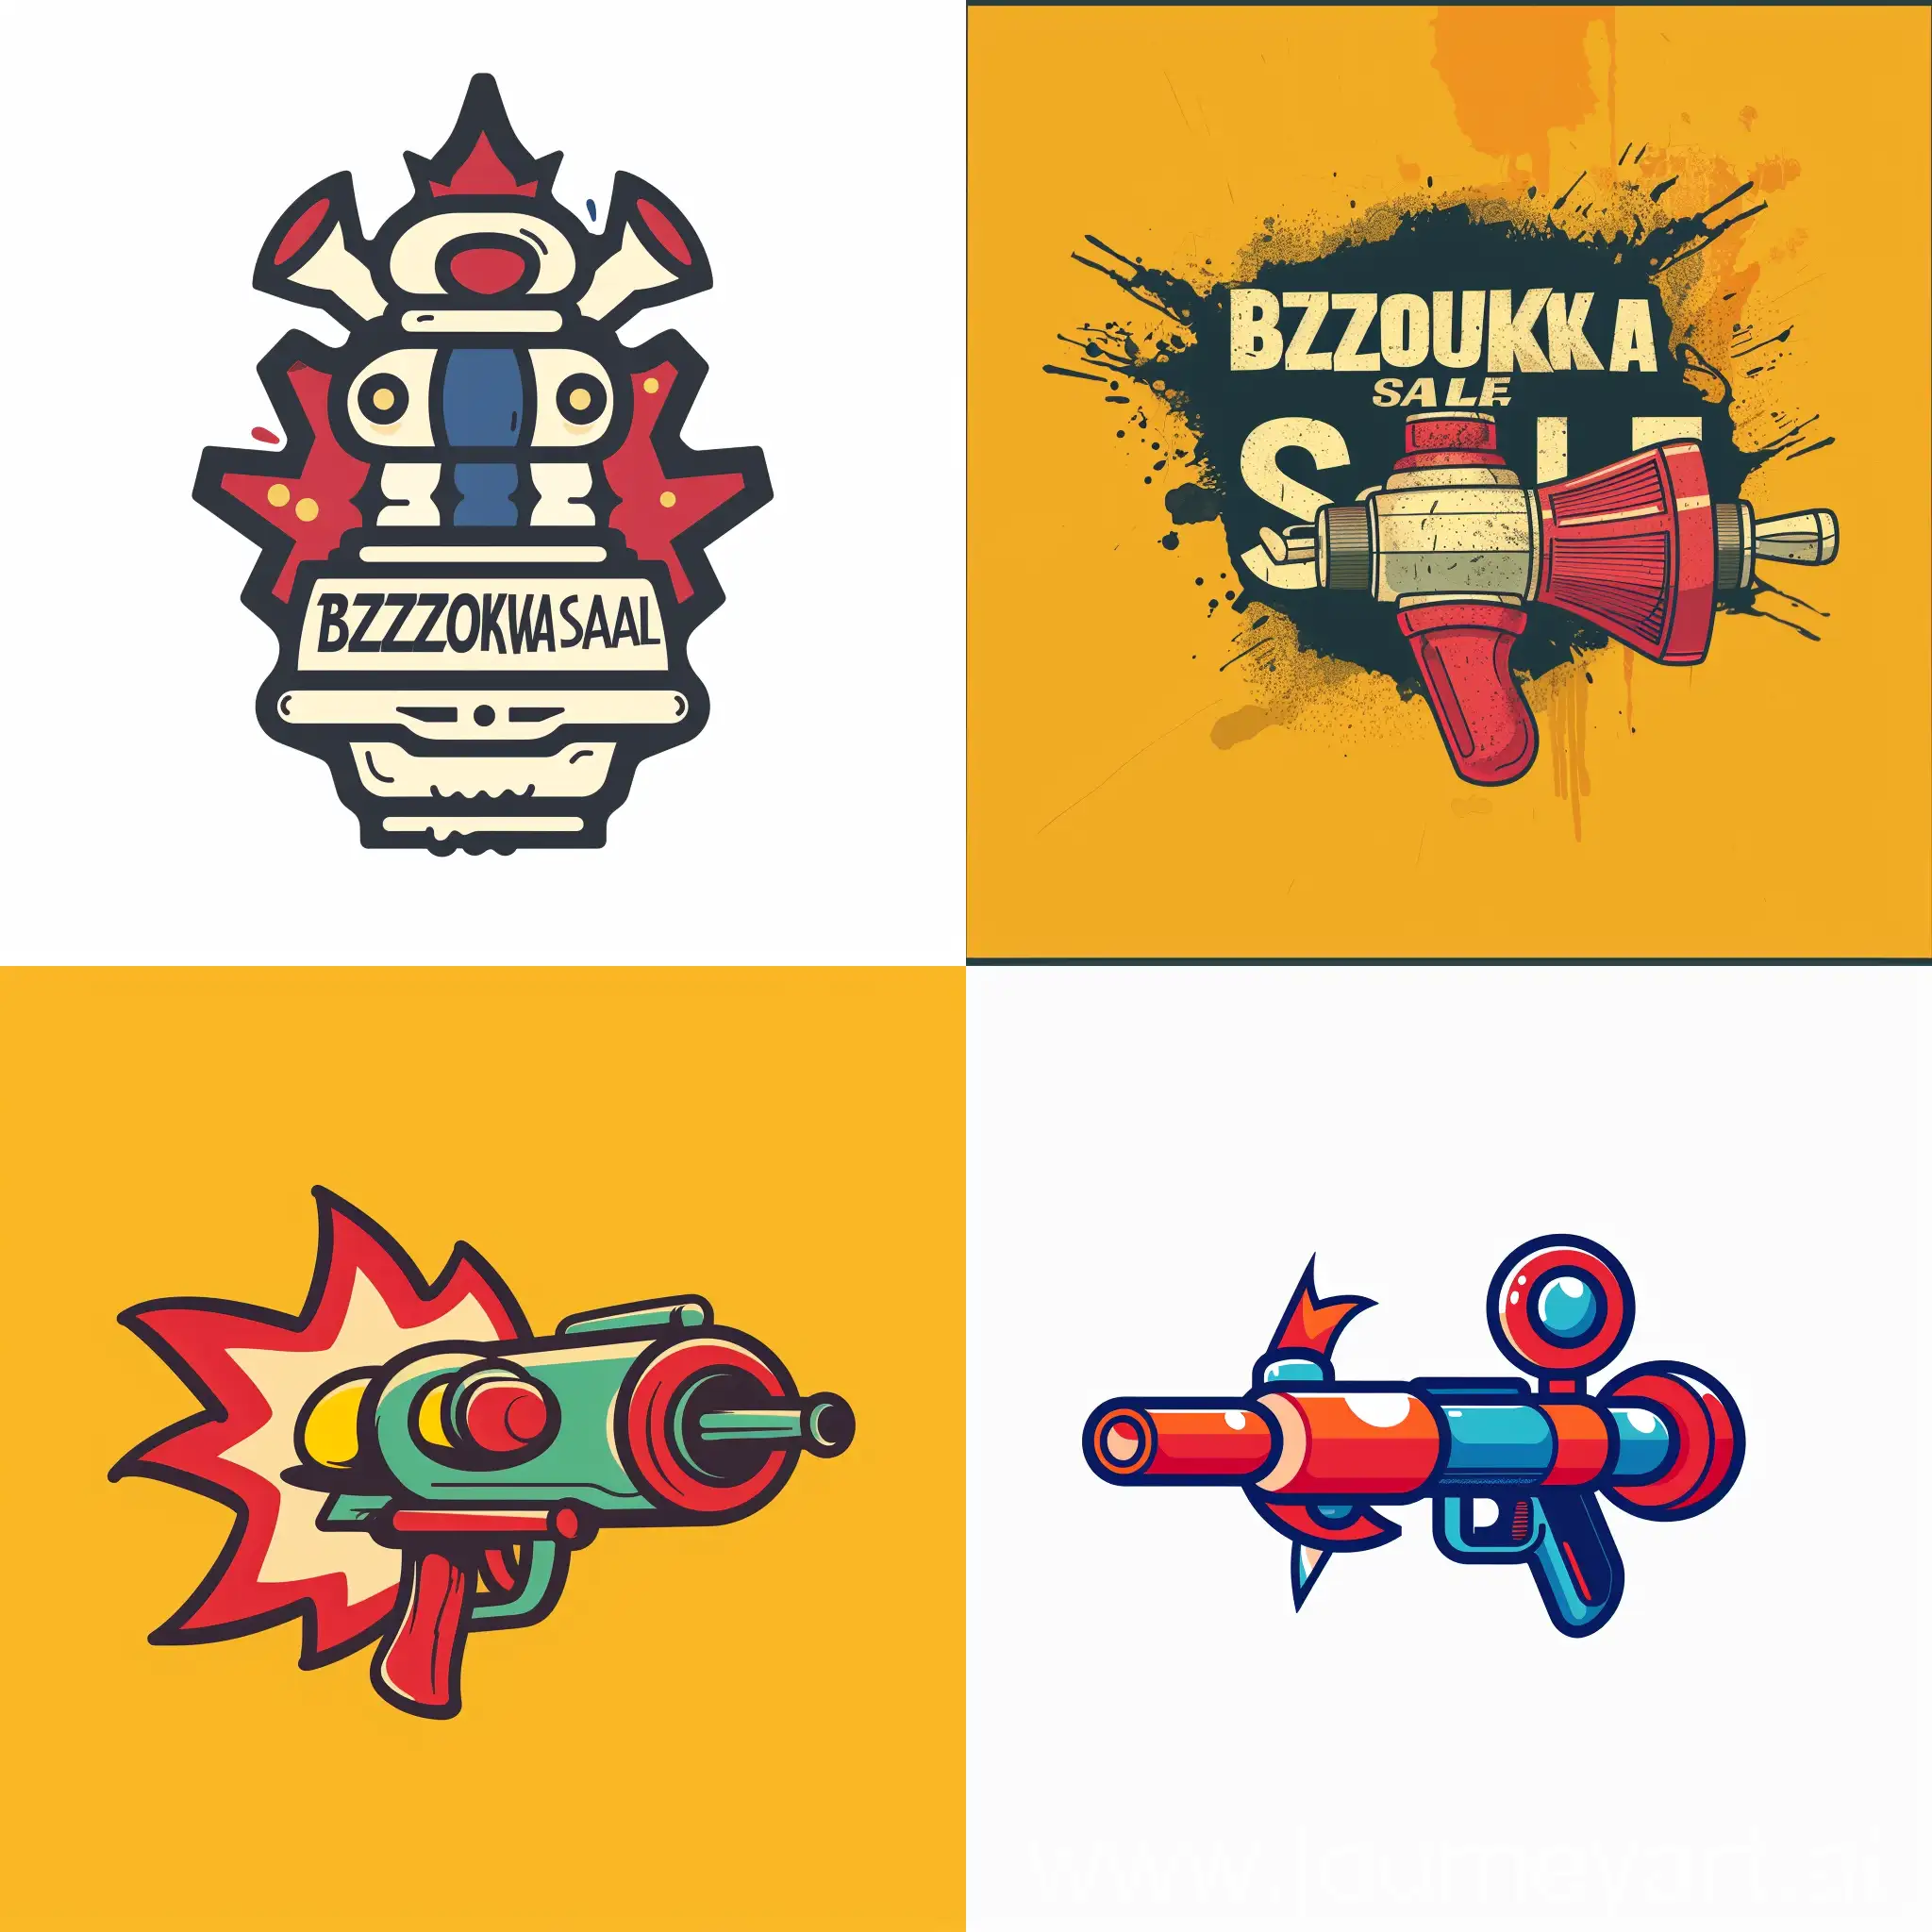 create a logo for the brand "Bazooka Sale"